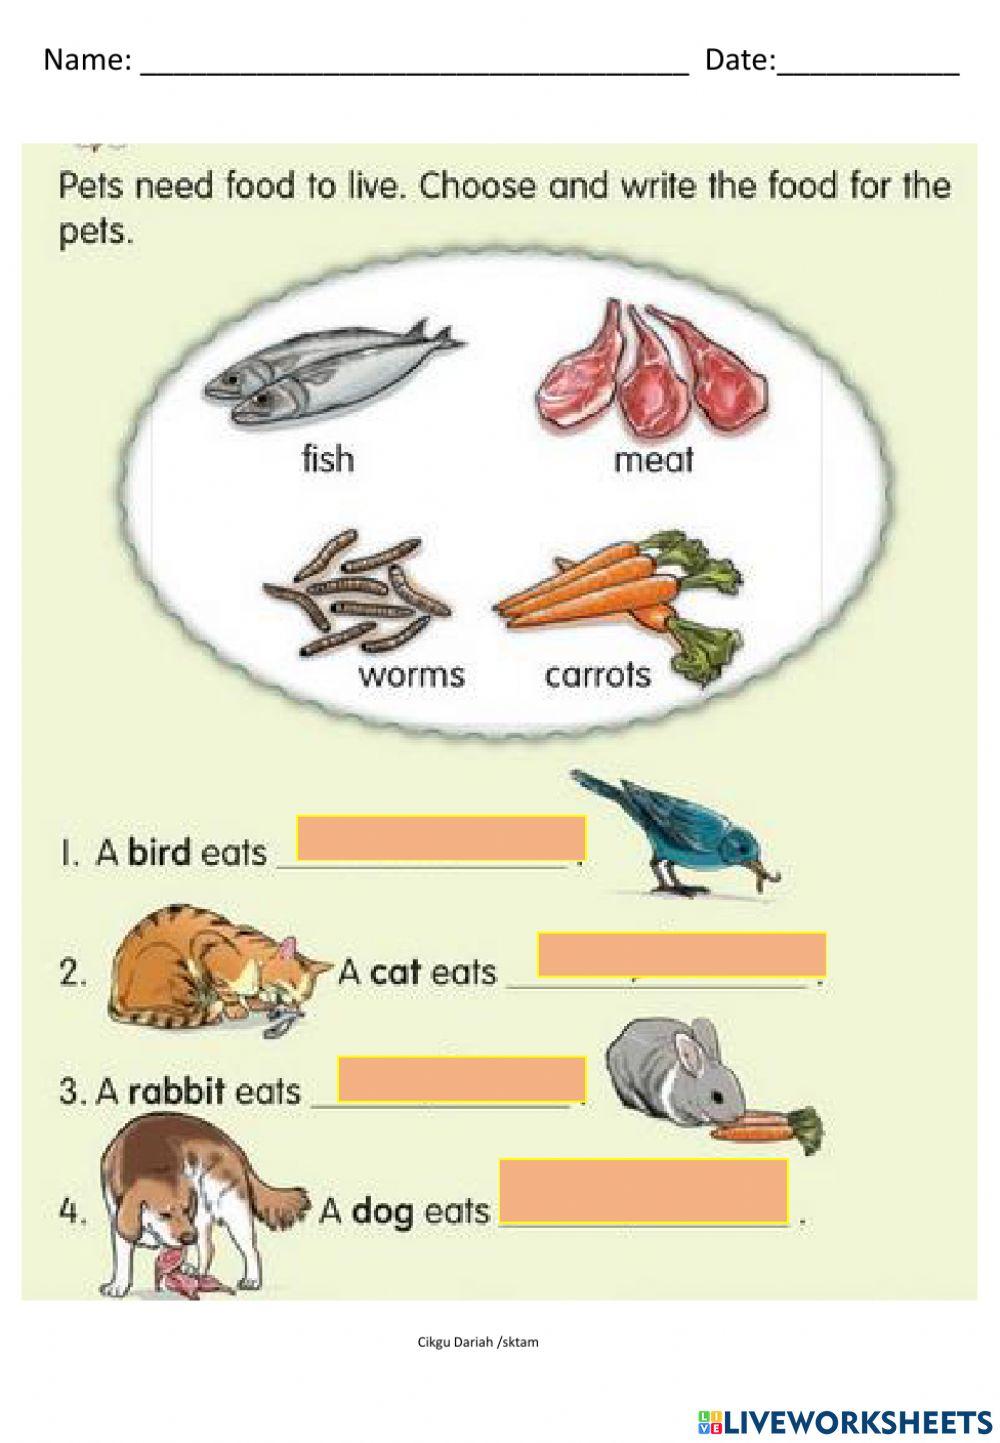 Food of pets 2